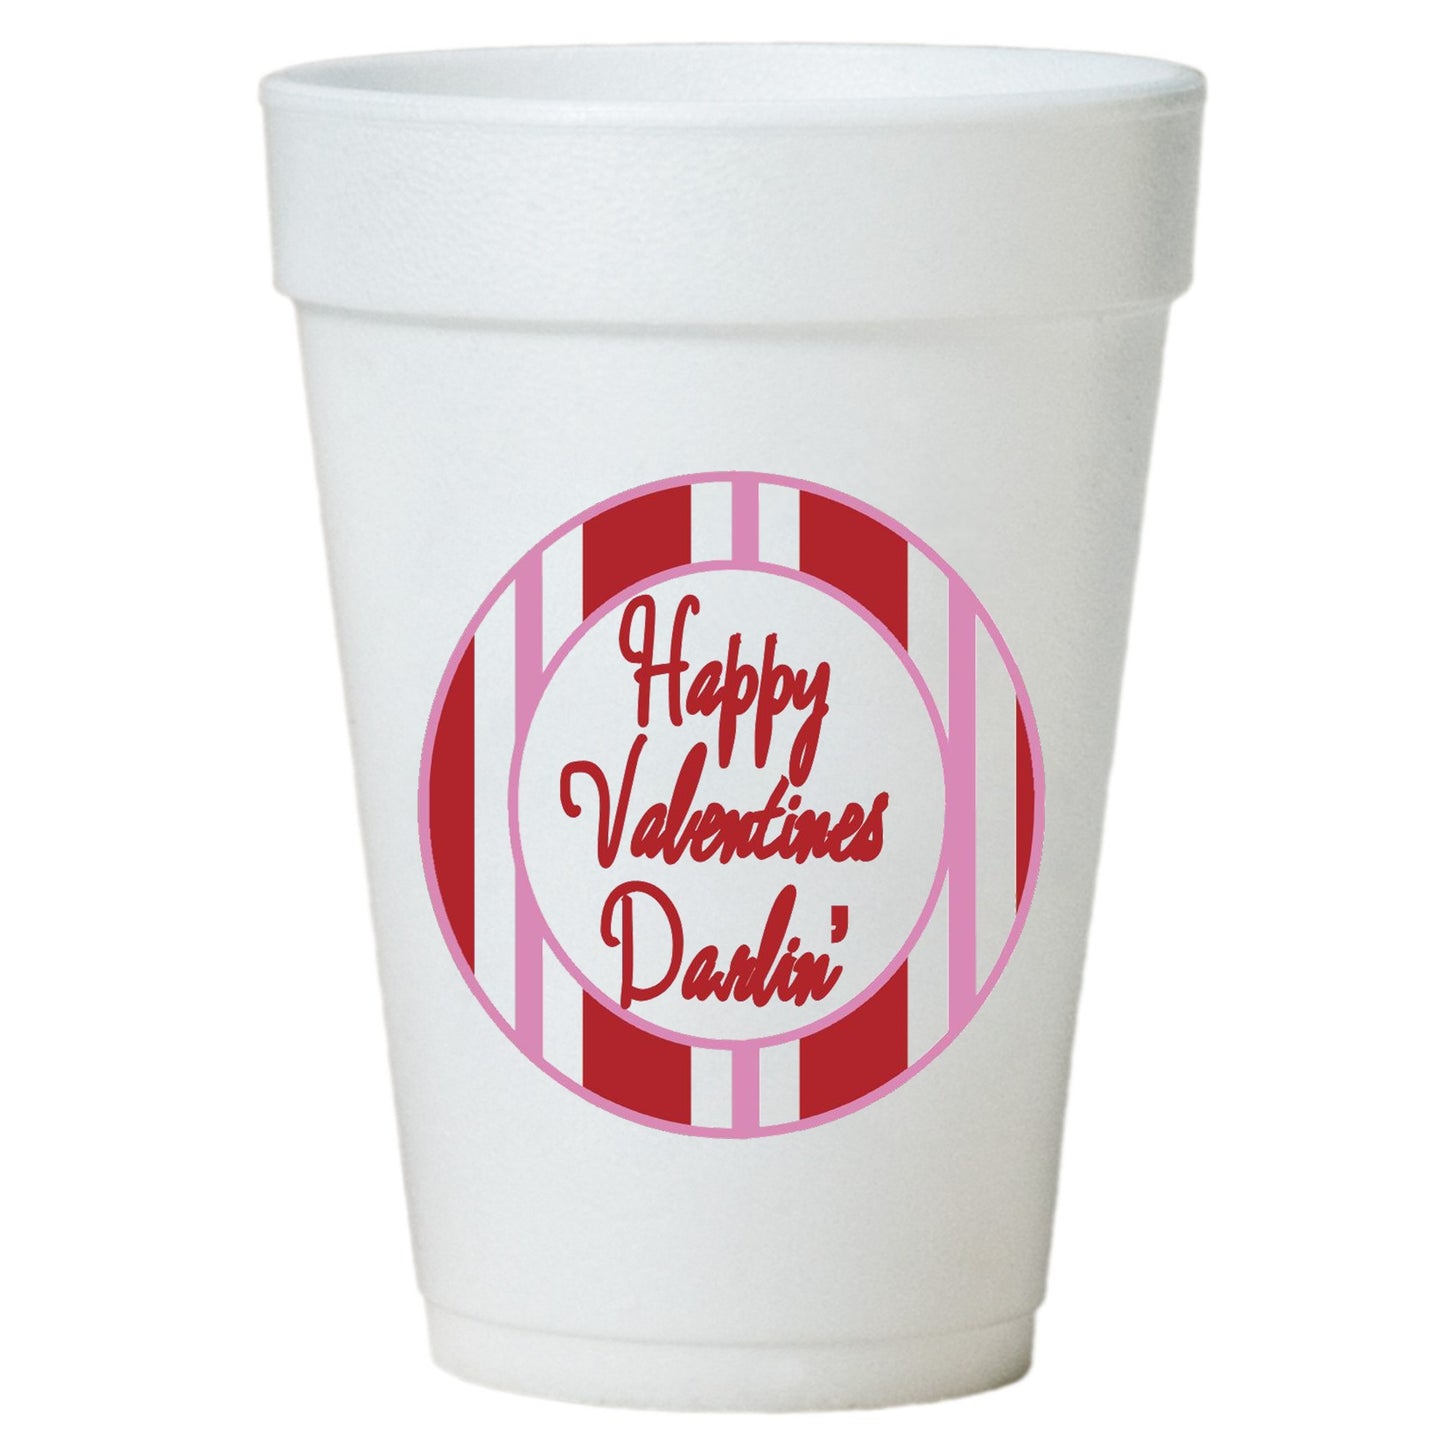 Happy Valentine Darlin' styrofoam Cups